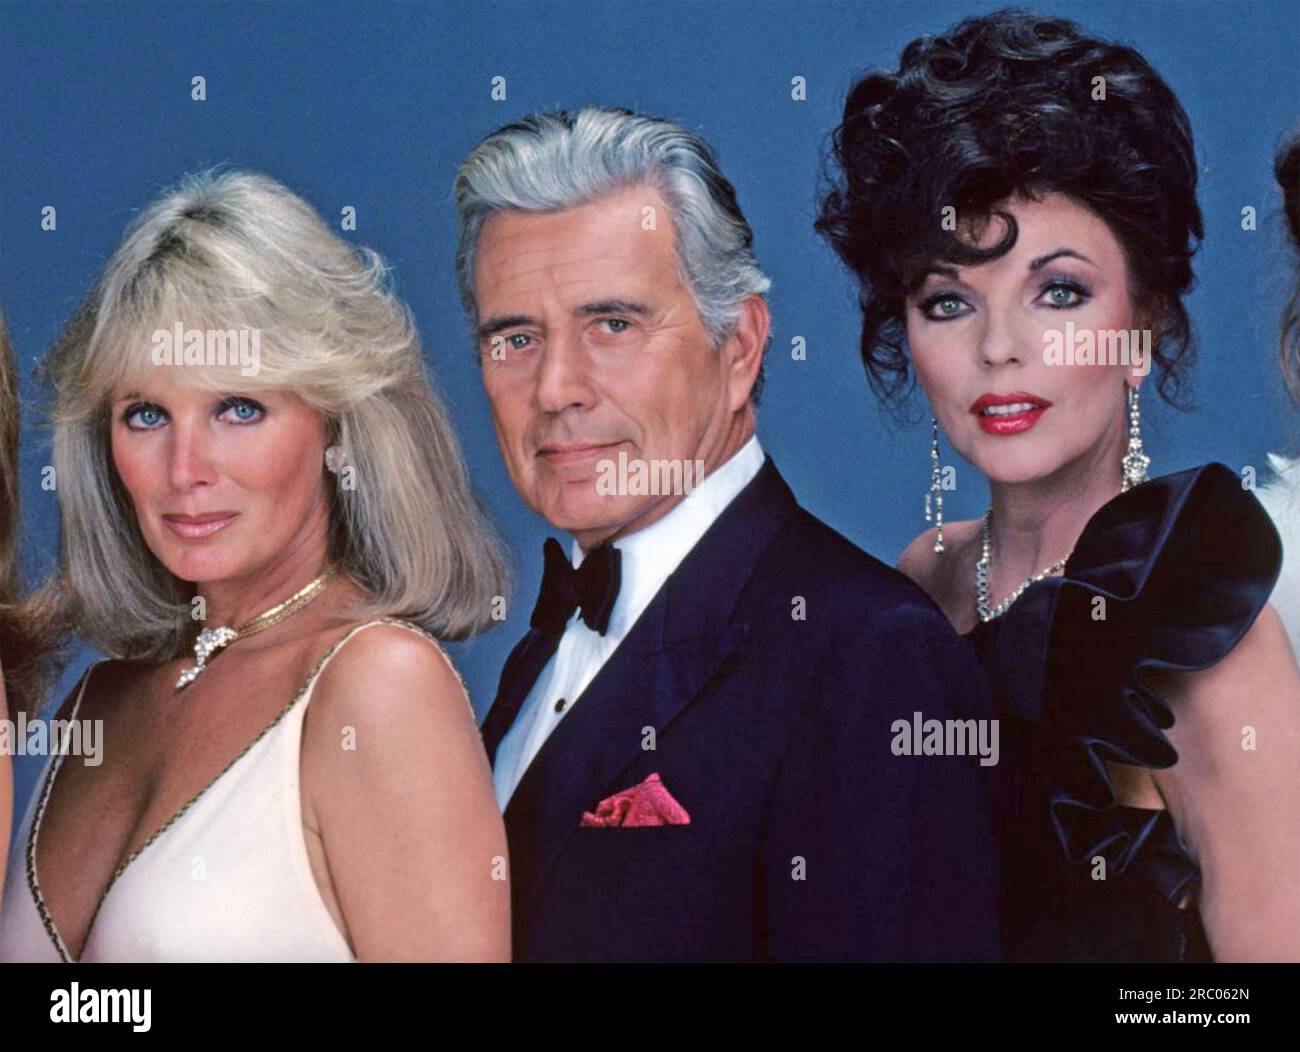 DYNASTY ABC TV Serie 1981-1989 mit Linda Evans, John Forsythe, Joan Collins von links. Stockfoto